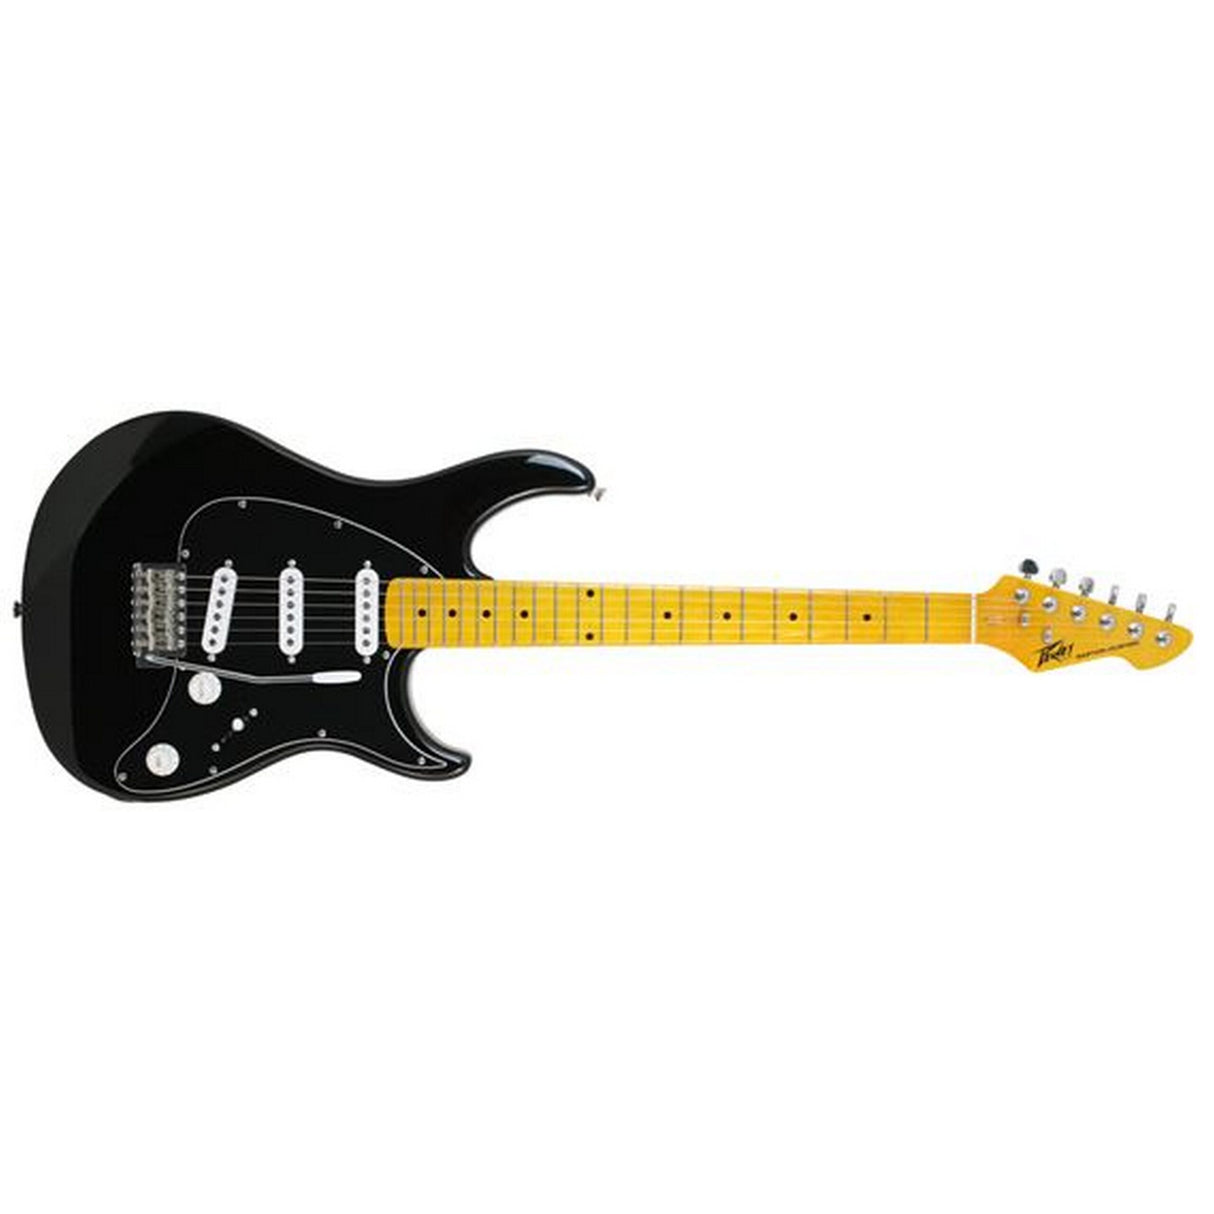 Peavey Raptor Custom Black Electric Guitar